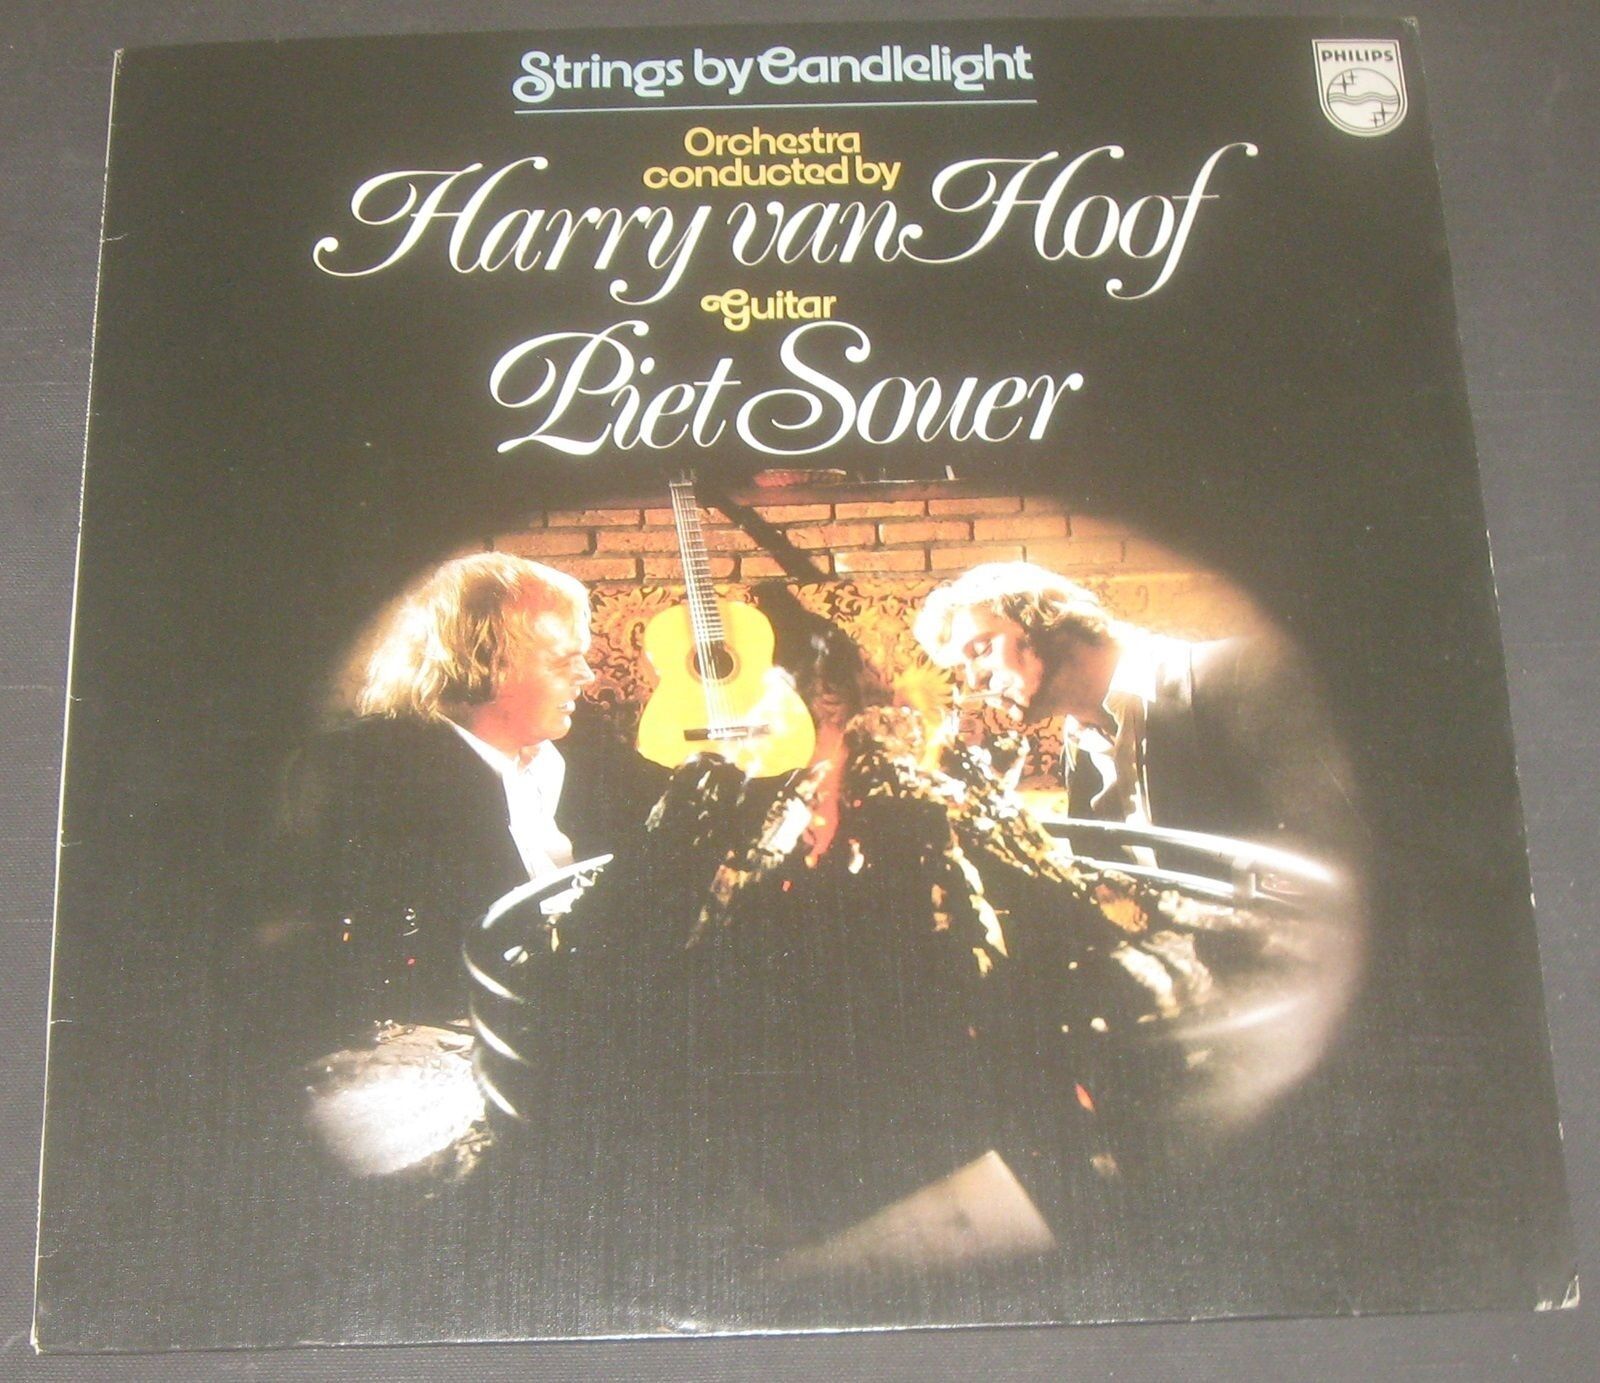 harry van hoof & piet souer – Strings by candlelight  Philips ‎6413 091 LP EX